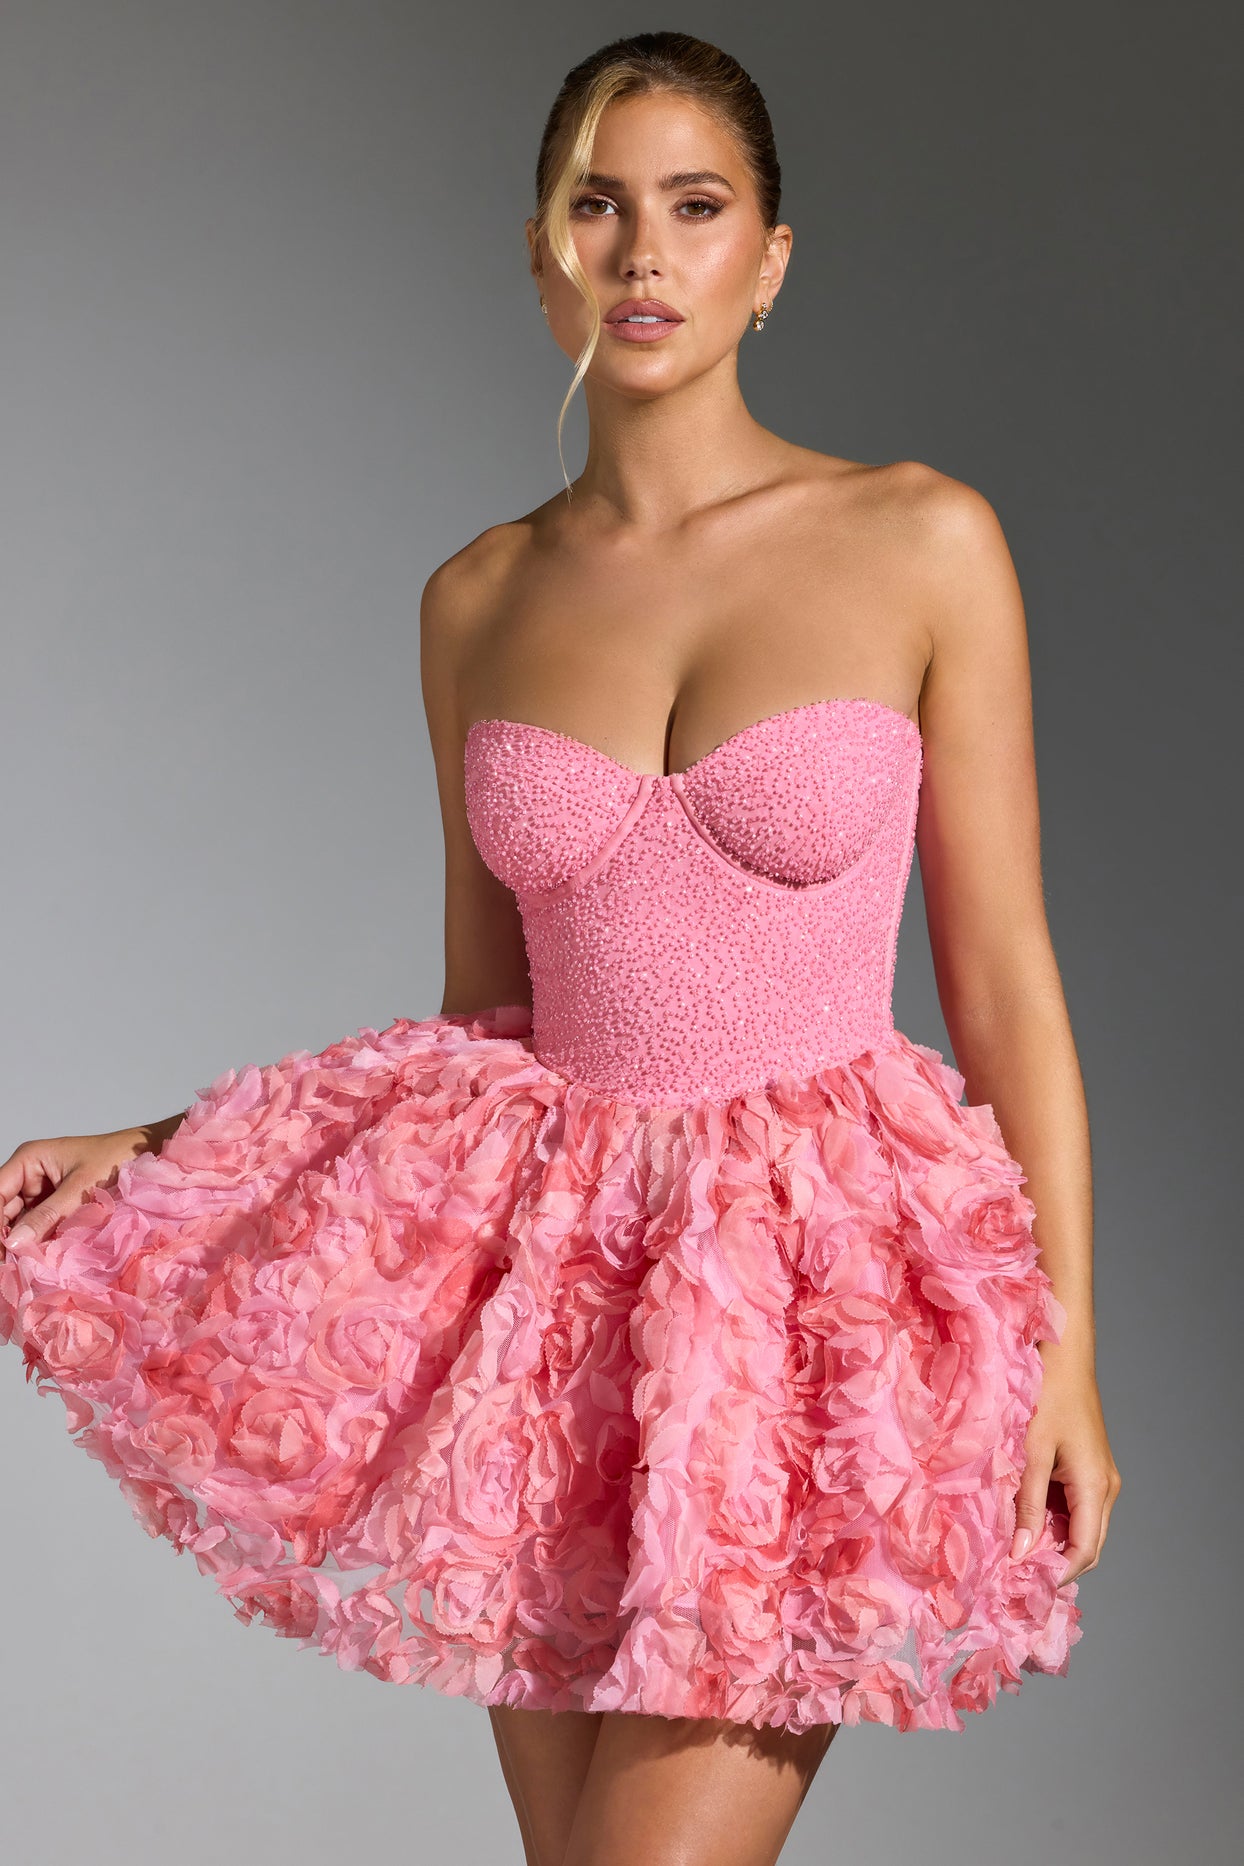 Embellished Floral-Appliqué Lace-Up Mini Dress in Pink